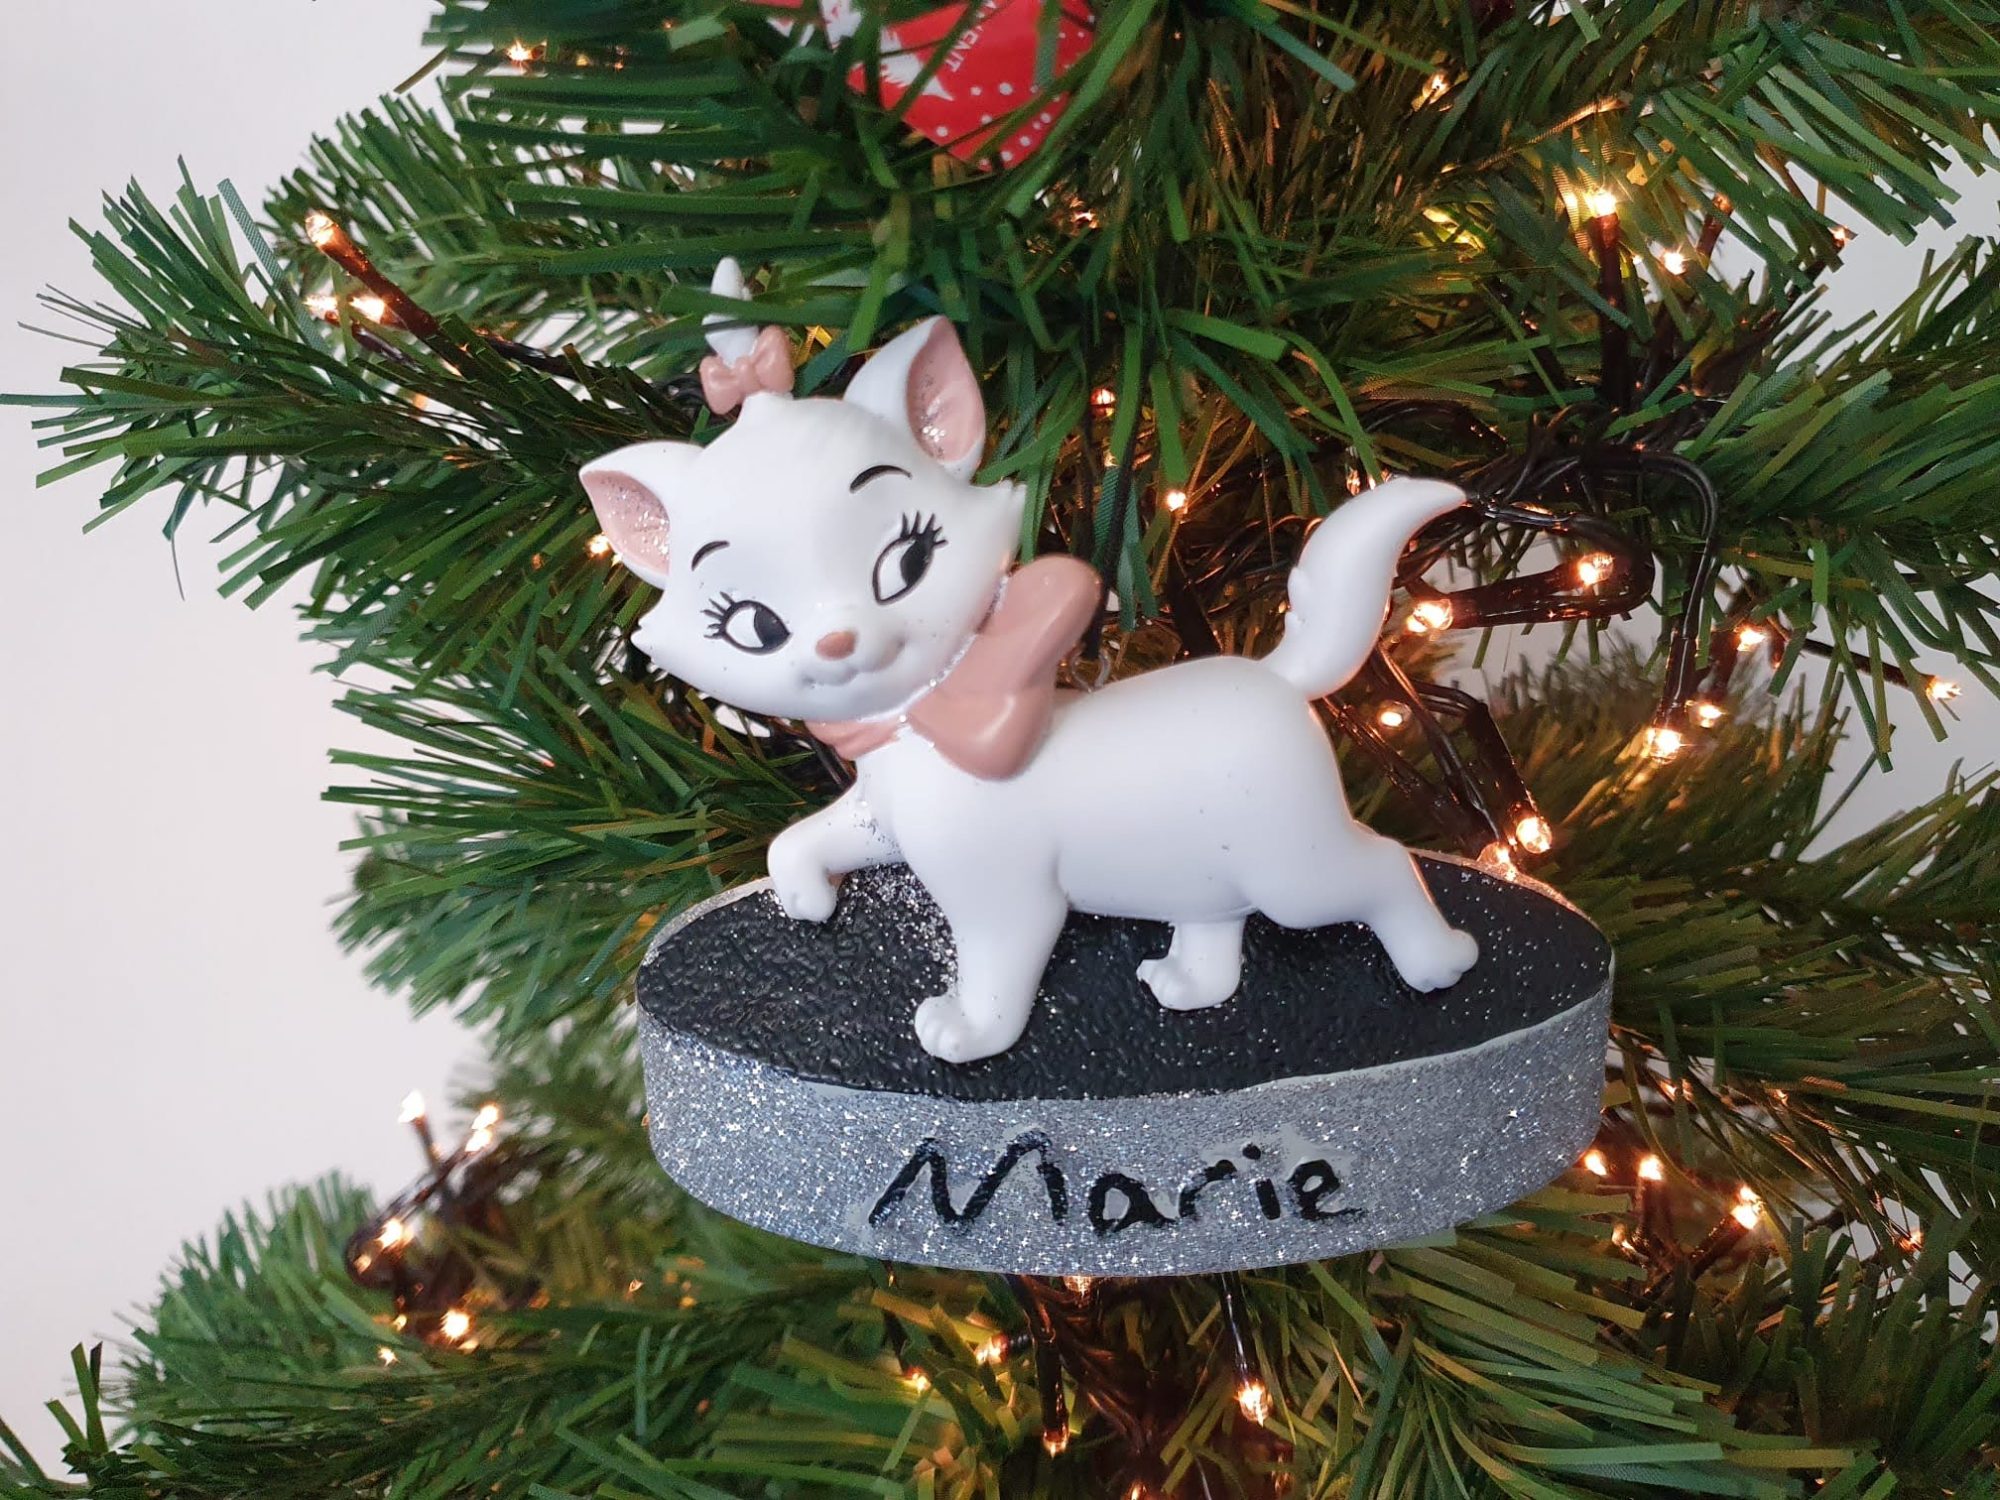 Marie on plateau ornament